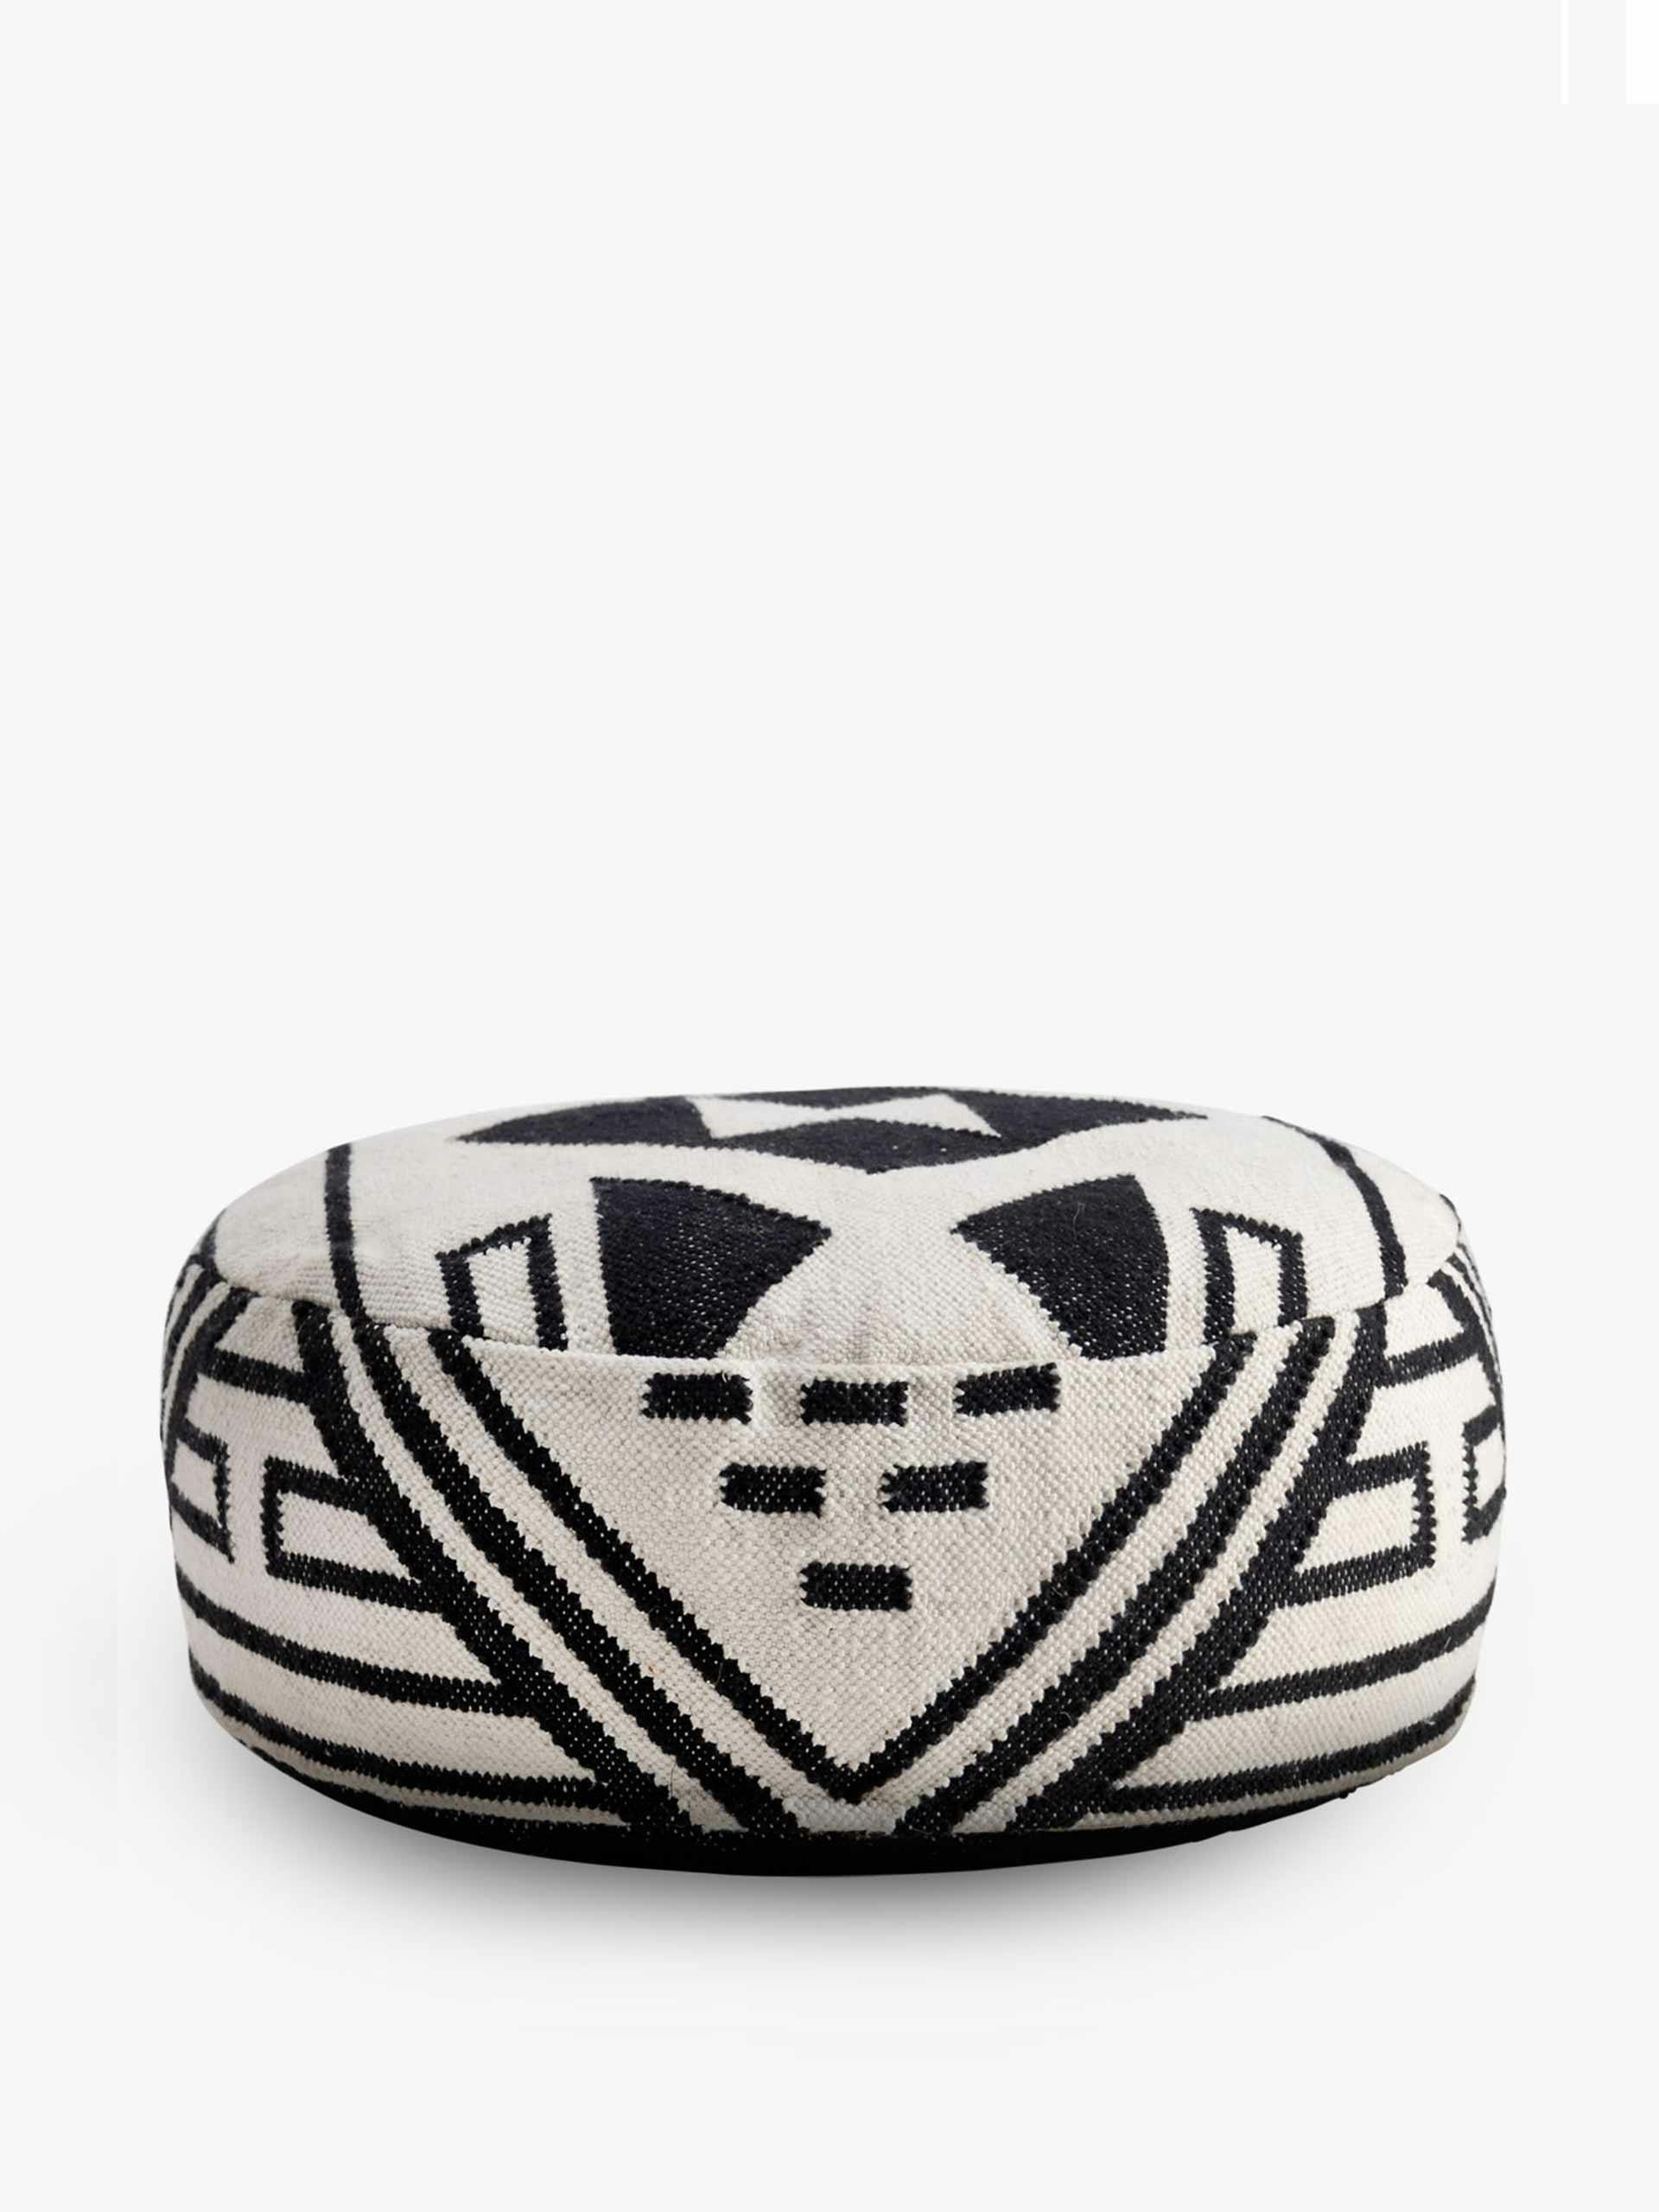 Aztec-patterned pouffe